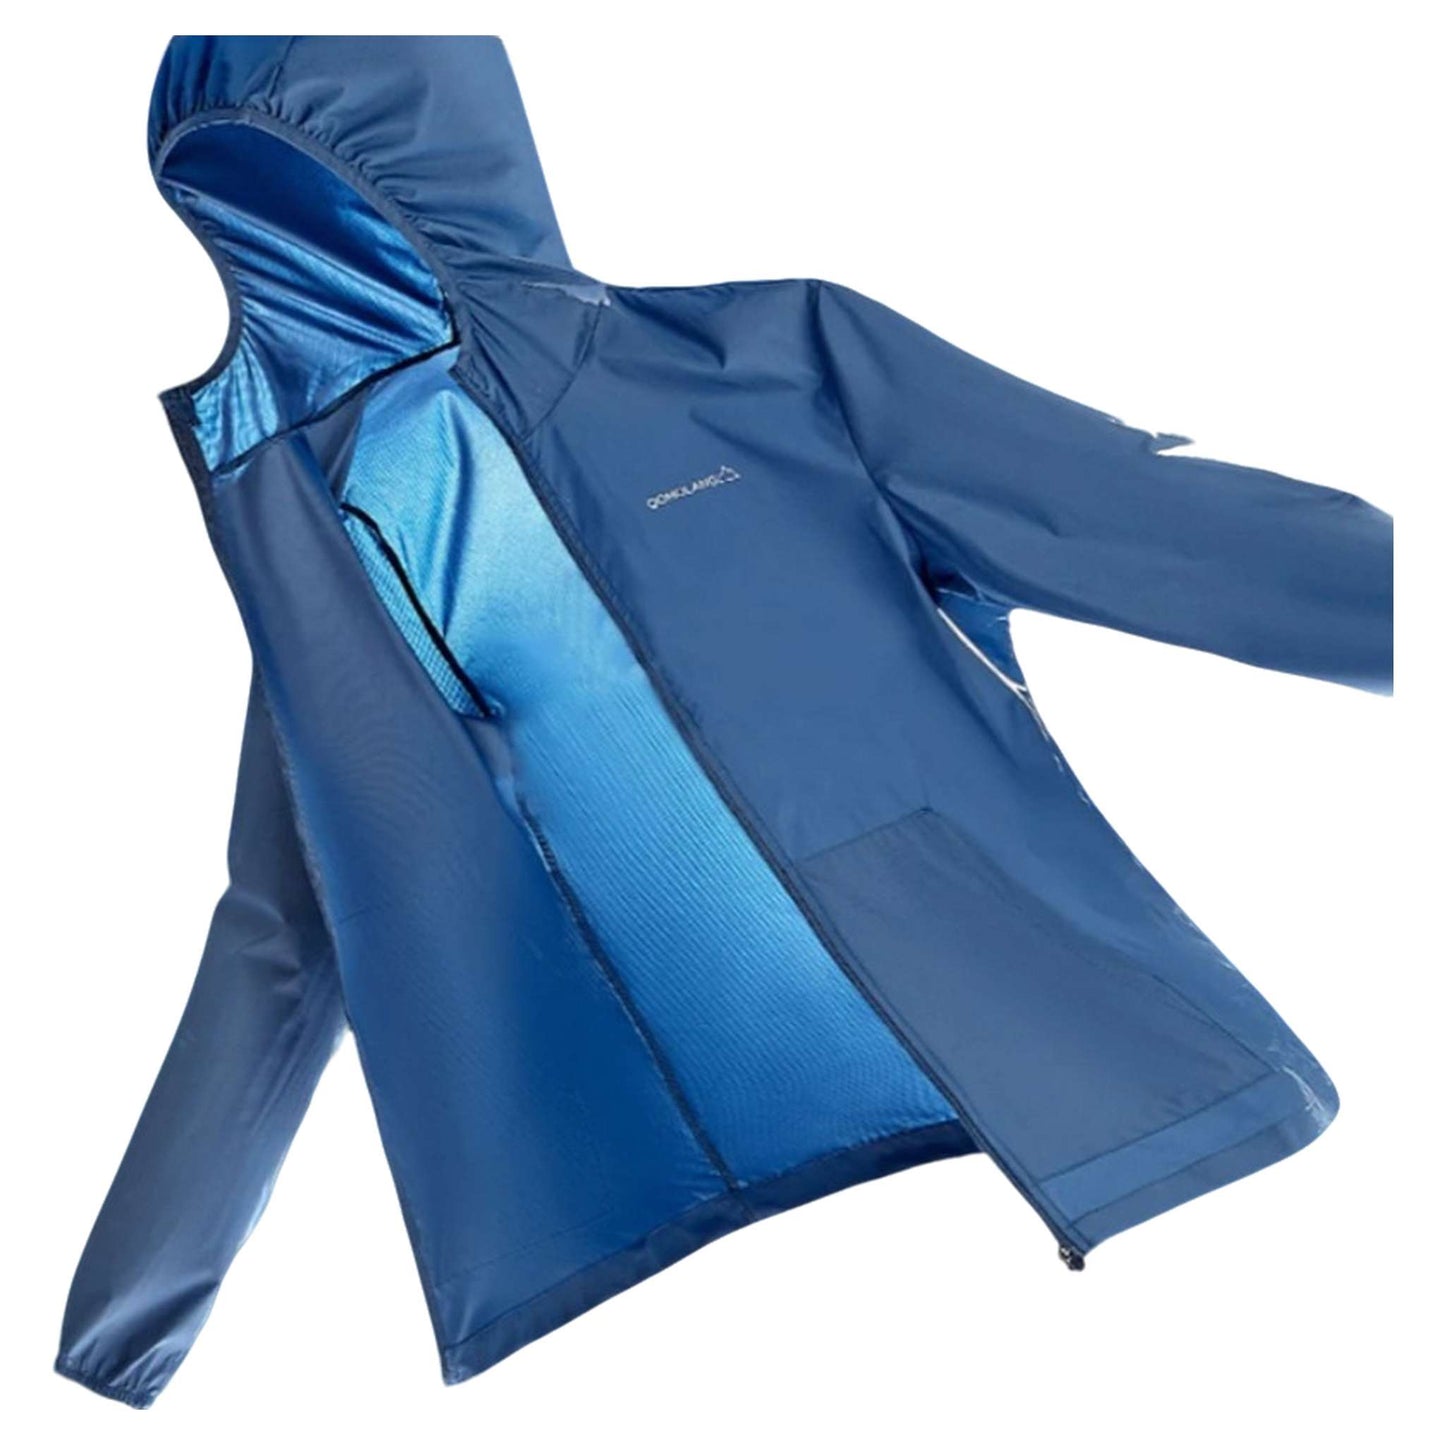 Men's UV Protection Hiking Jacket - Breathable Windbreaker with UPF 50+ Sun Shield